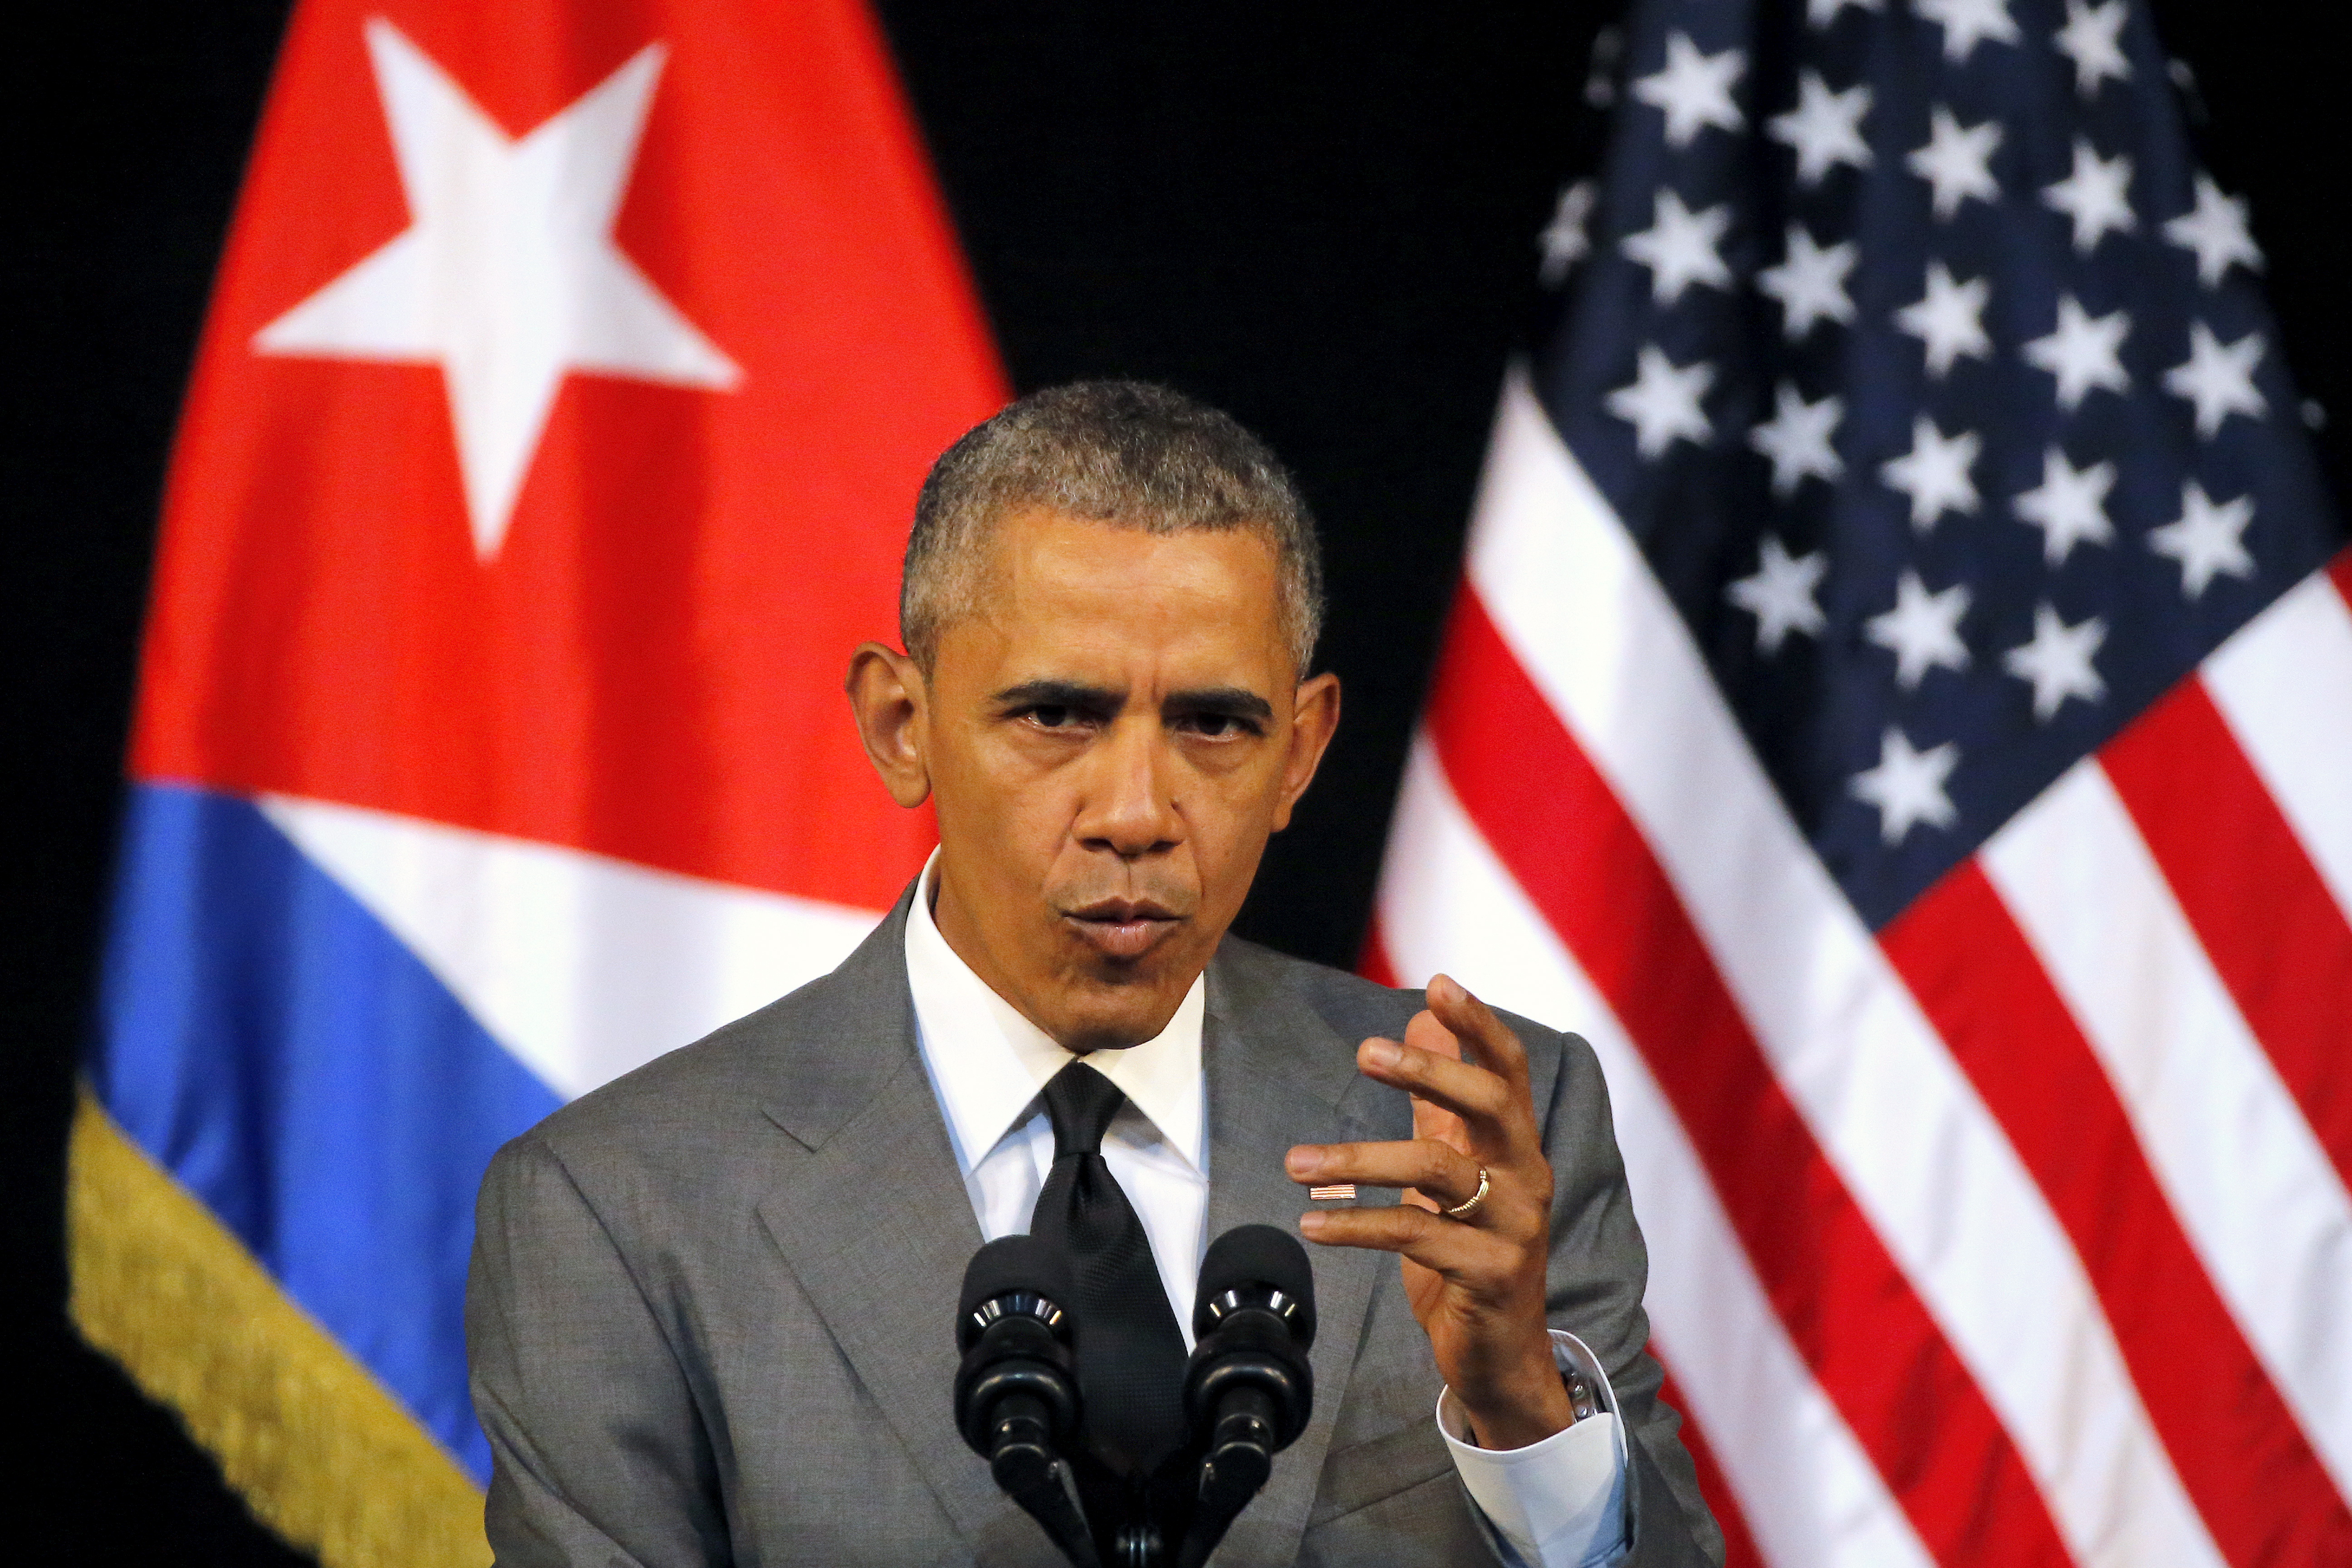 Obama says history will judge Castro's impact on world